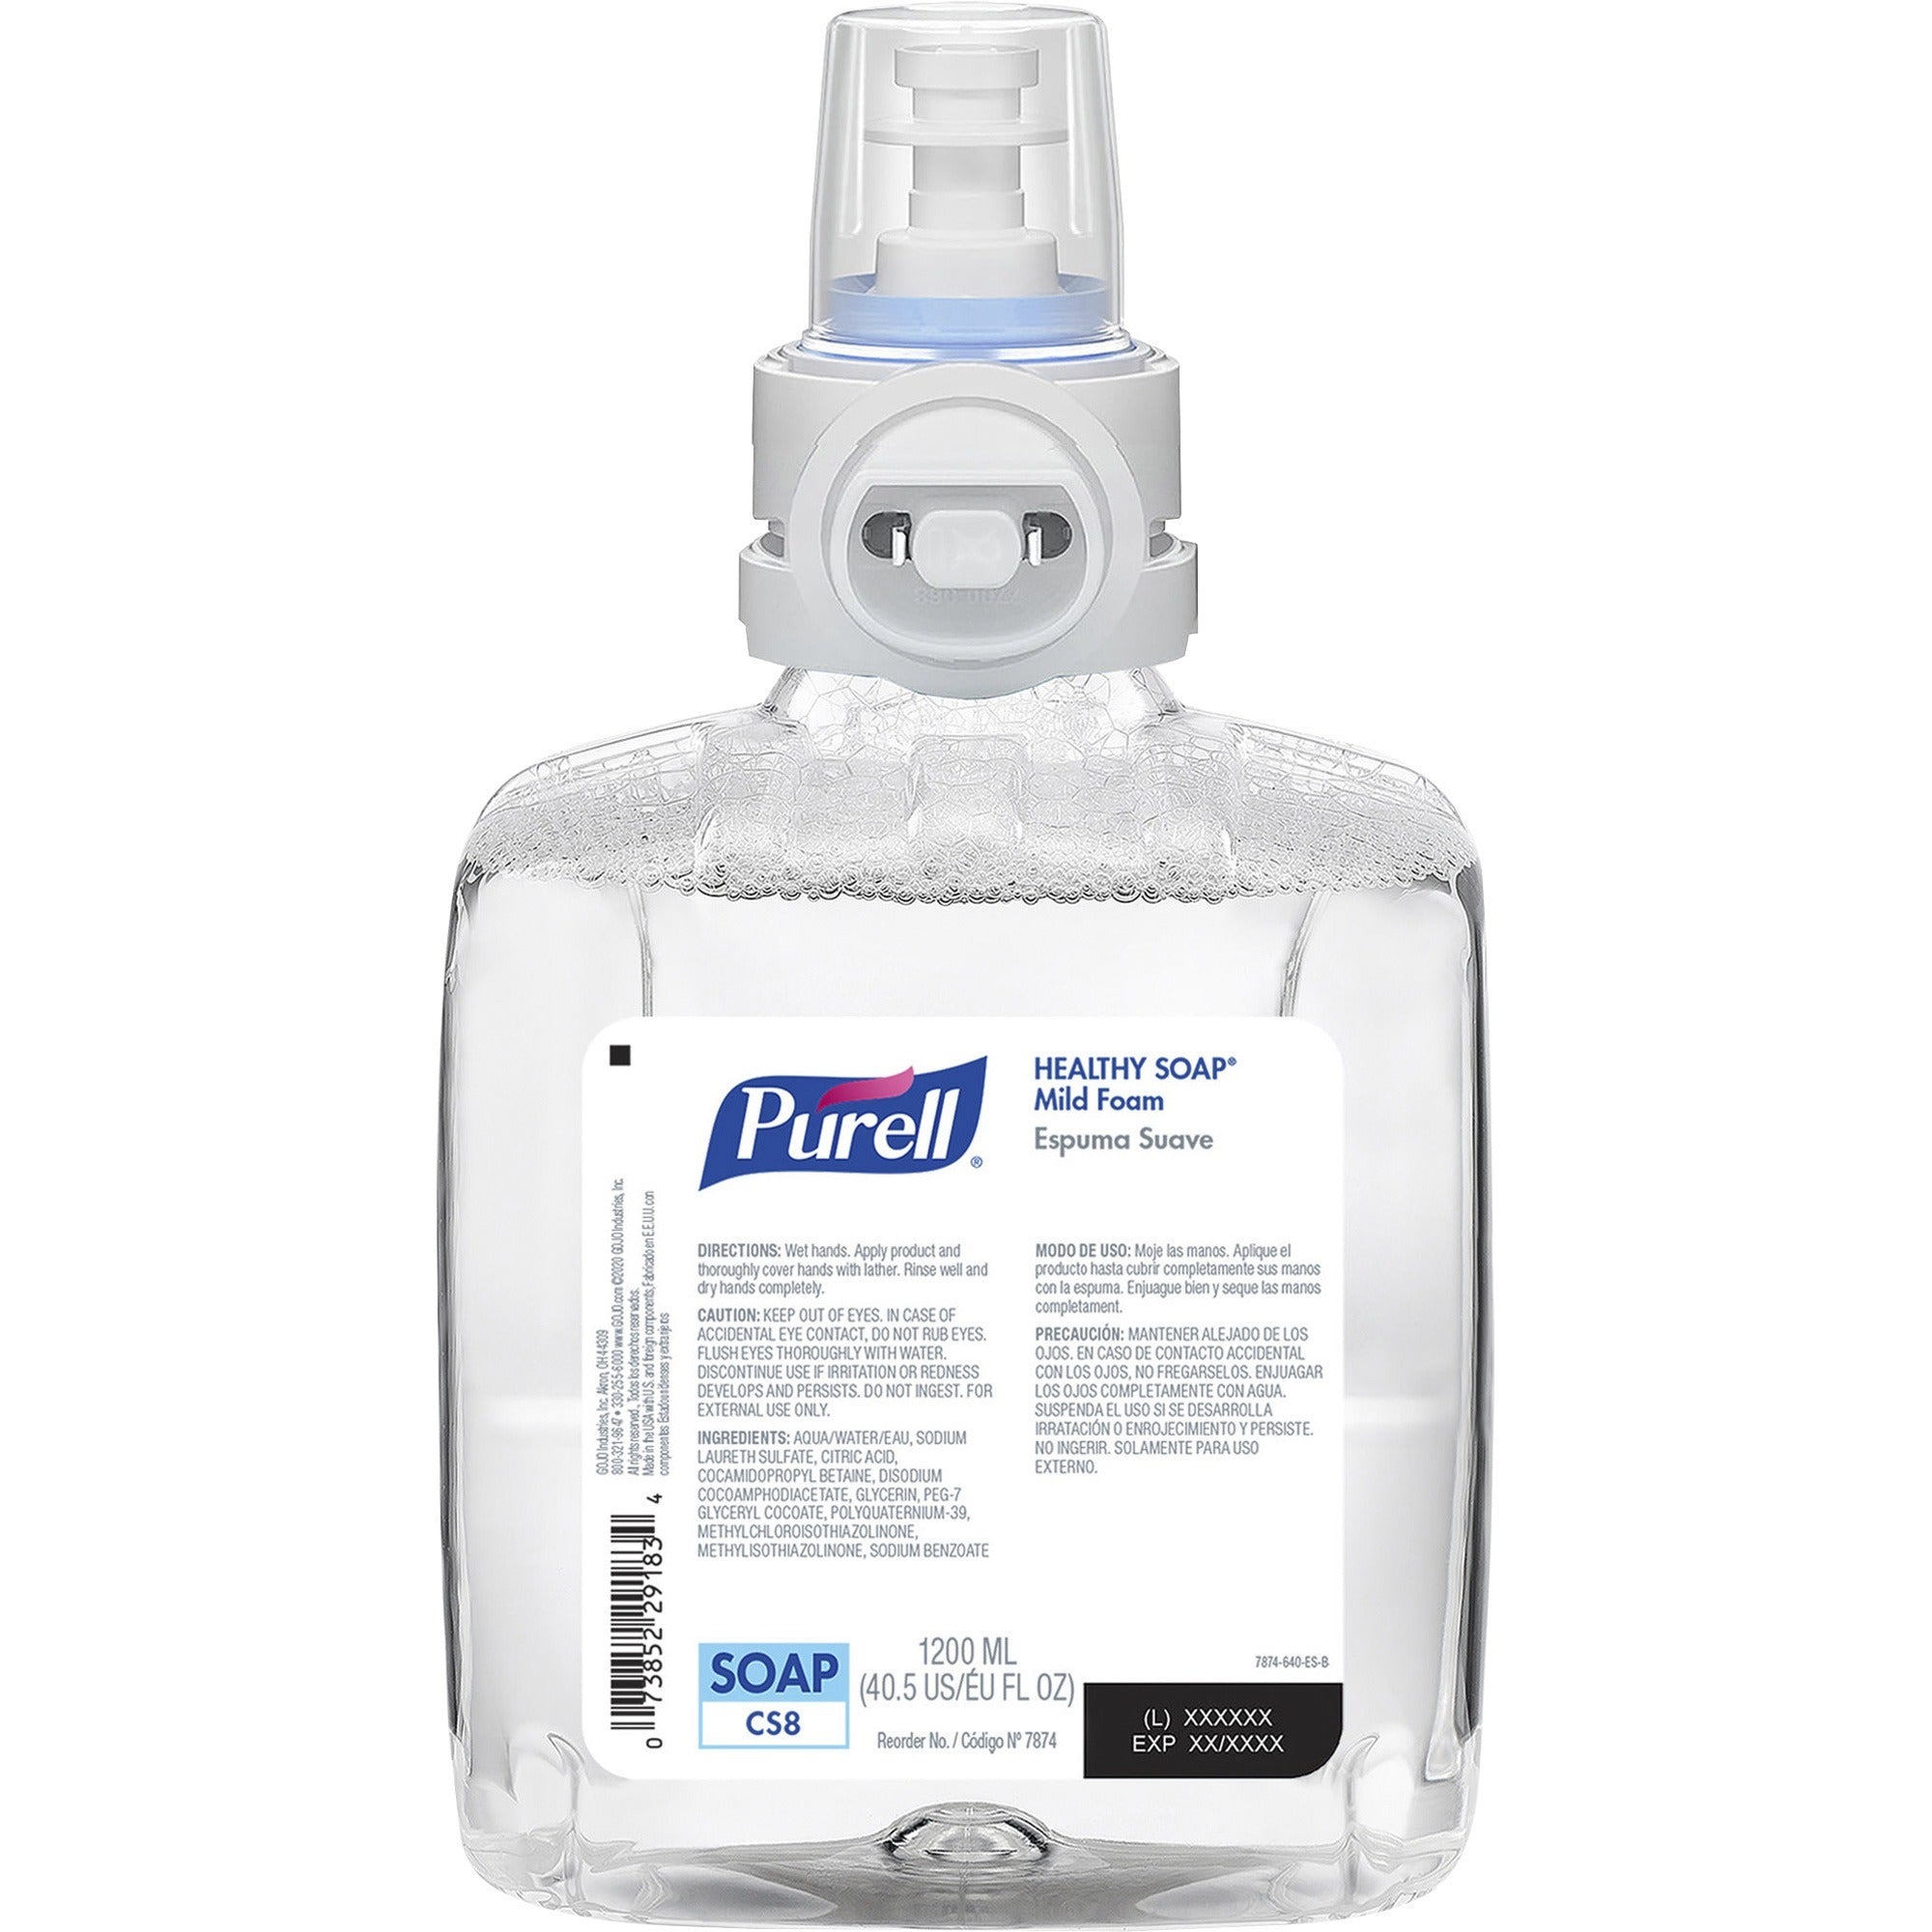 purell-cs8-refill-healthy-soap-mild-foam-fresh-fruit-scentfor-406-fl-oz-1200-ml-dirt-remover-kill-germs-hand-skin-moisturizing-dye-free-fragrance-free-bio-based-2-carton_goj787402 - 1